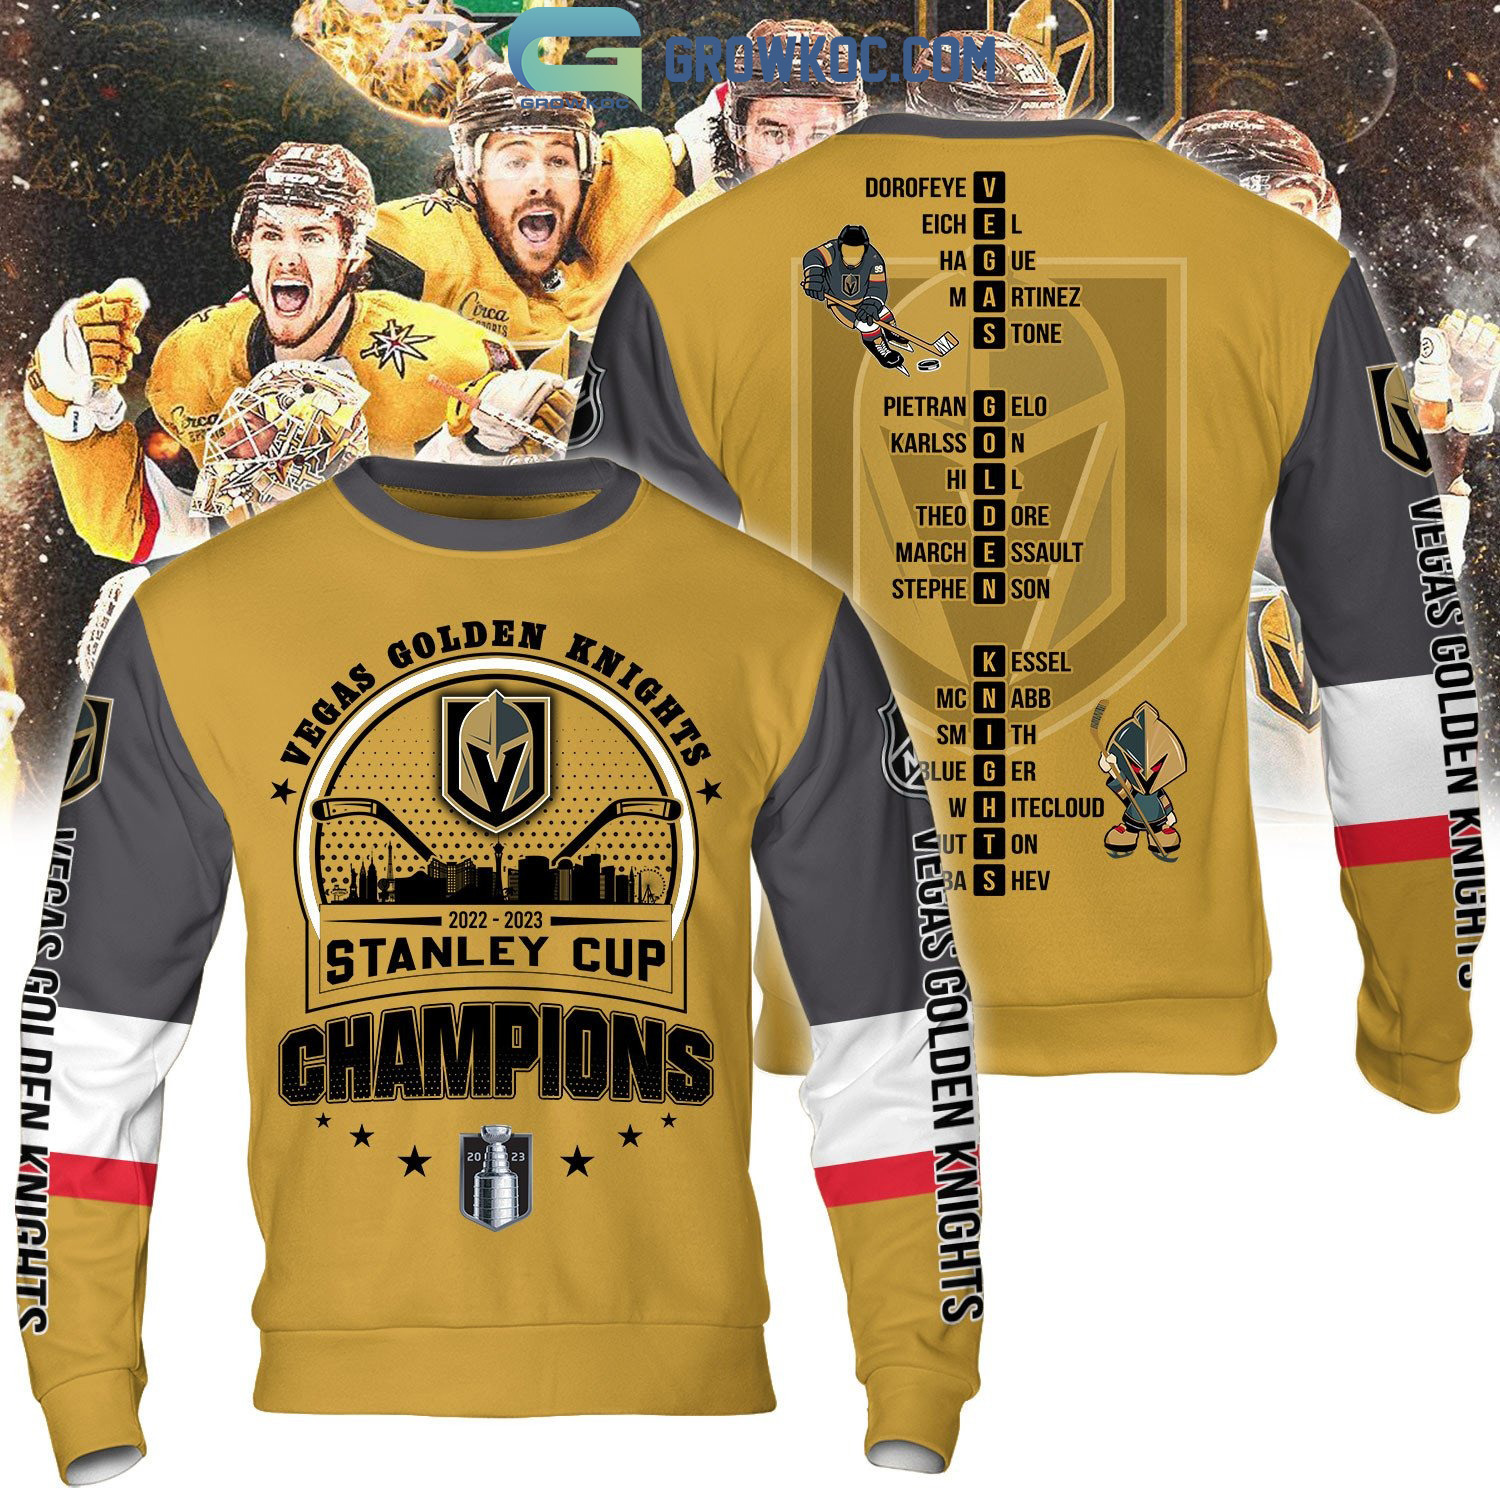 2023 Stanley Cup Champions Vegas Golden Knights NHL Team Grey Design Hoodie  T Shirt - Growkoc